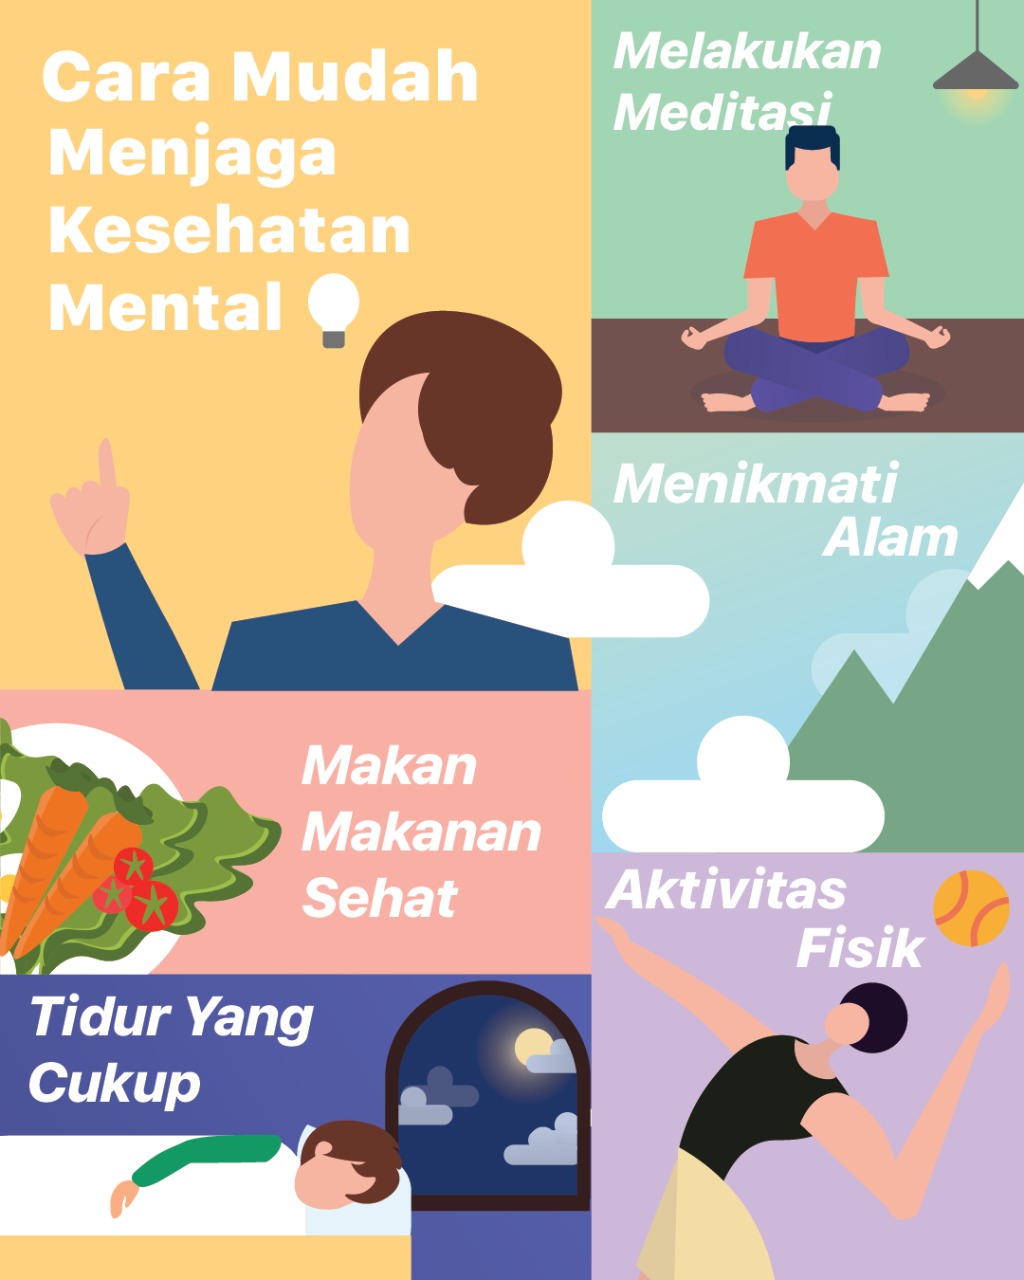 You are currently viewing Poster Cara Mudah Menjaga Kesehatan Mental karya Elesepta Zaneta Tuzzuhrah